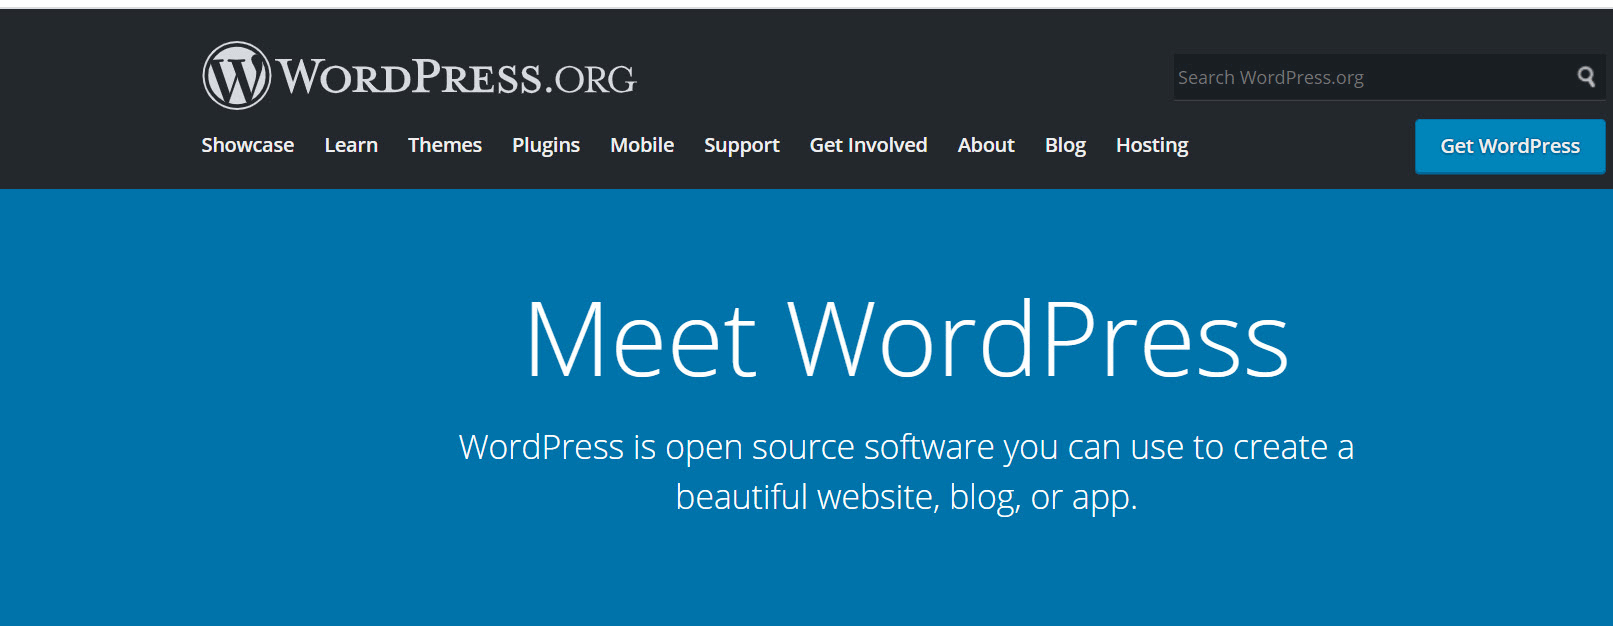 dark blue background with text saying Meet WordPress.org